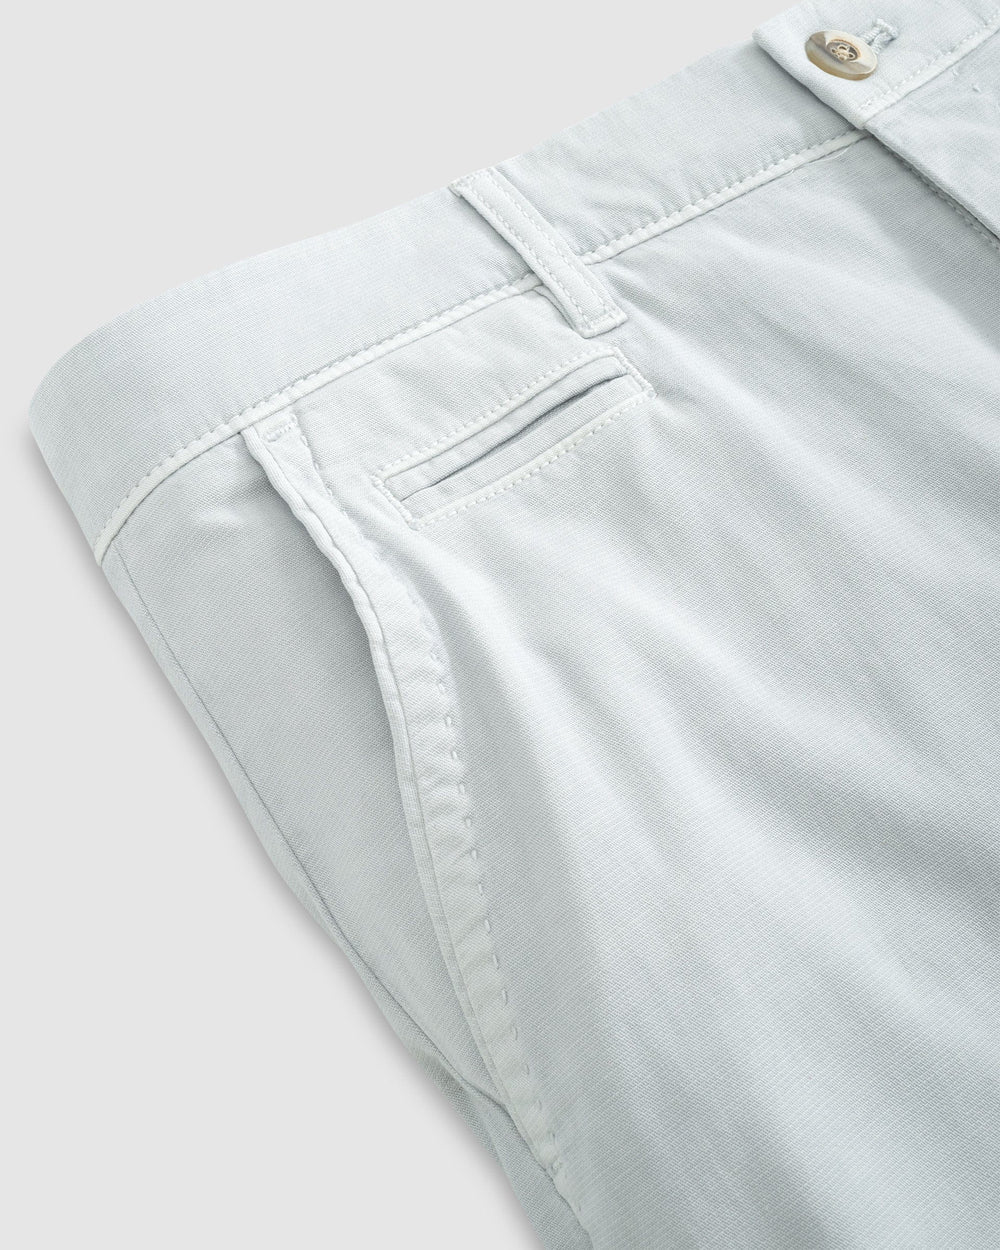 Johnnie-O Nassau Cotton Blend Shorts